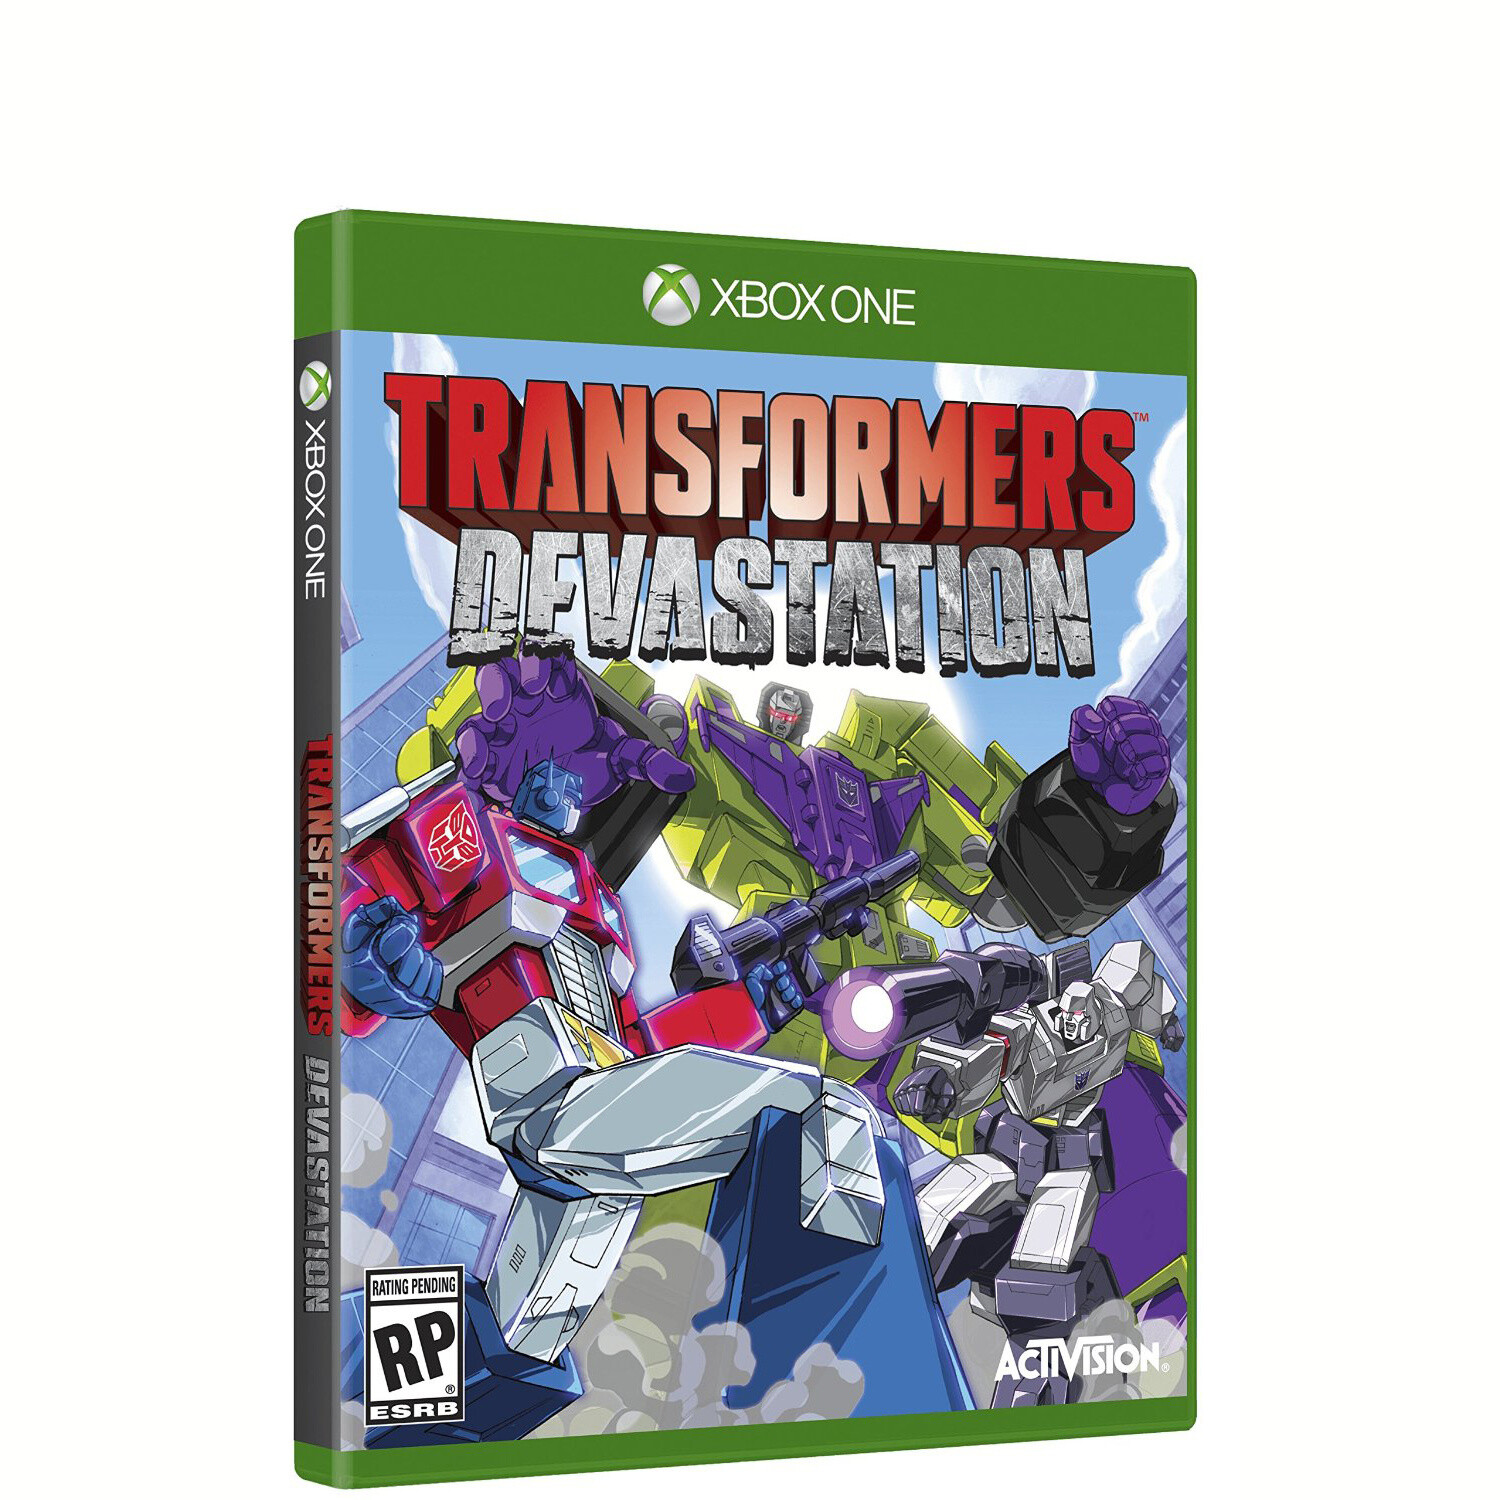 Transformers xbox. Игра трансформеры Девастейшен. Xbox one Transformers: Devastation. Transformers Devastation Xbox. Transformers Xbox 360.